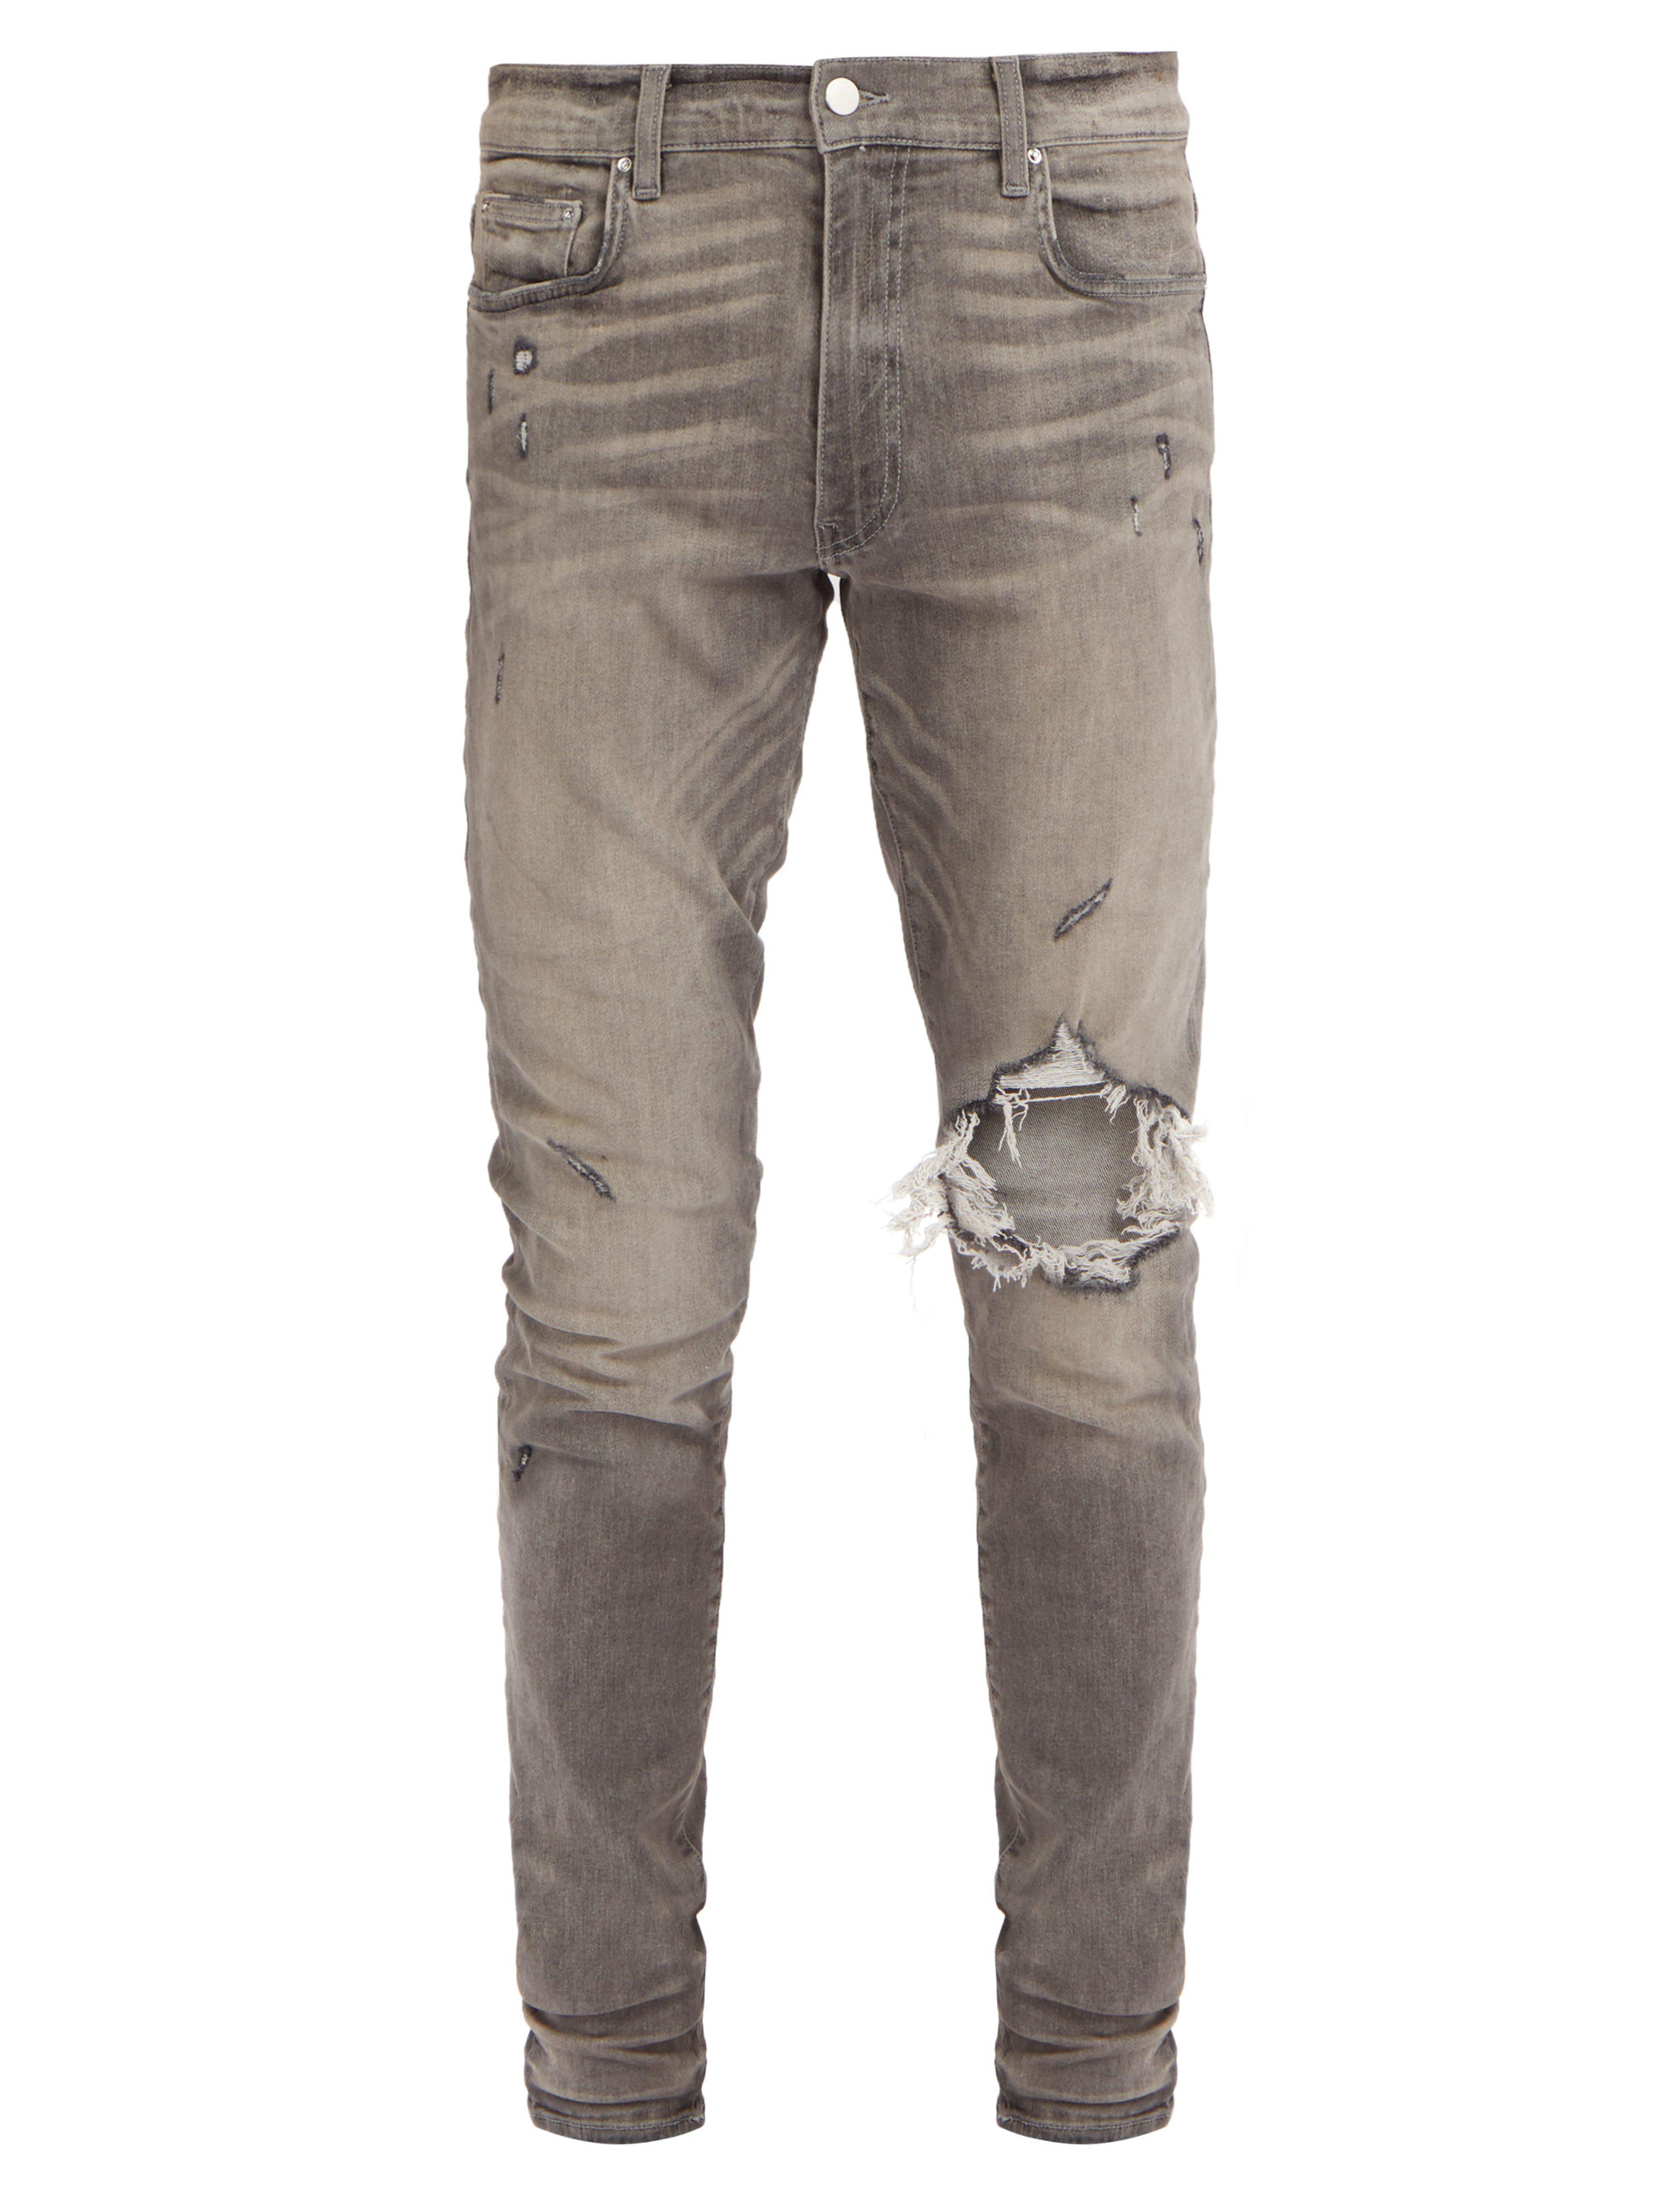 Amiri Denim Broken Skinny Fit Jeans in Grey (Grey) for Men - Lyst